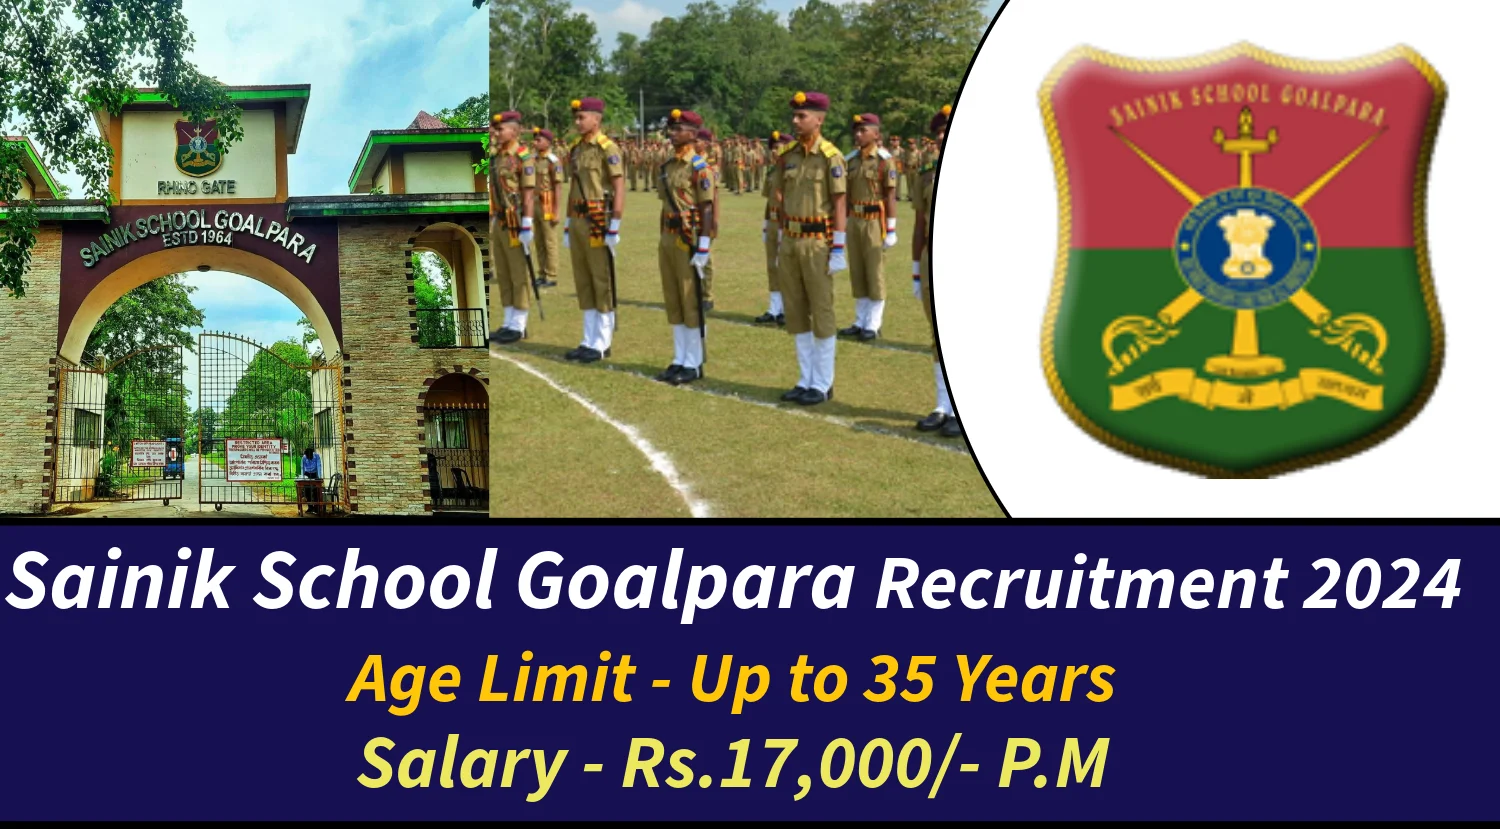 Sainik School Goalpara Coach, Drama, Music, Dance and Others Teacher Recruitment 2024 Notification Out